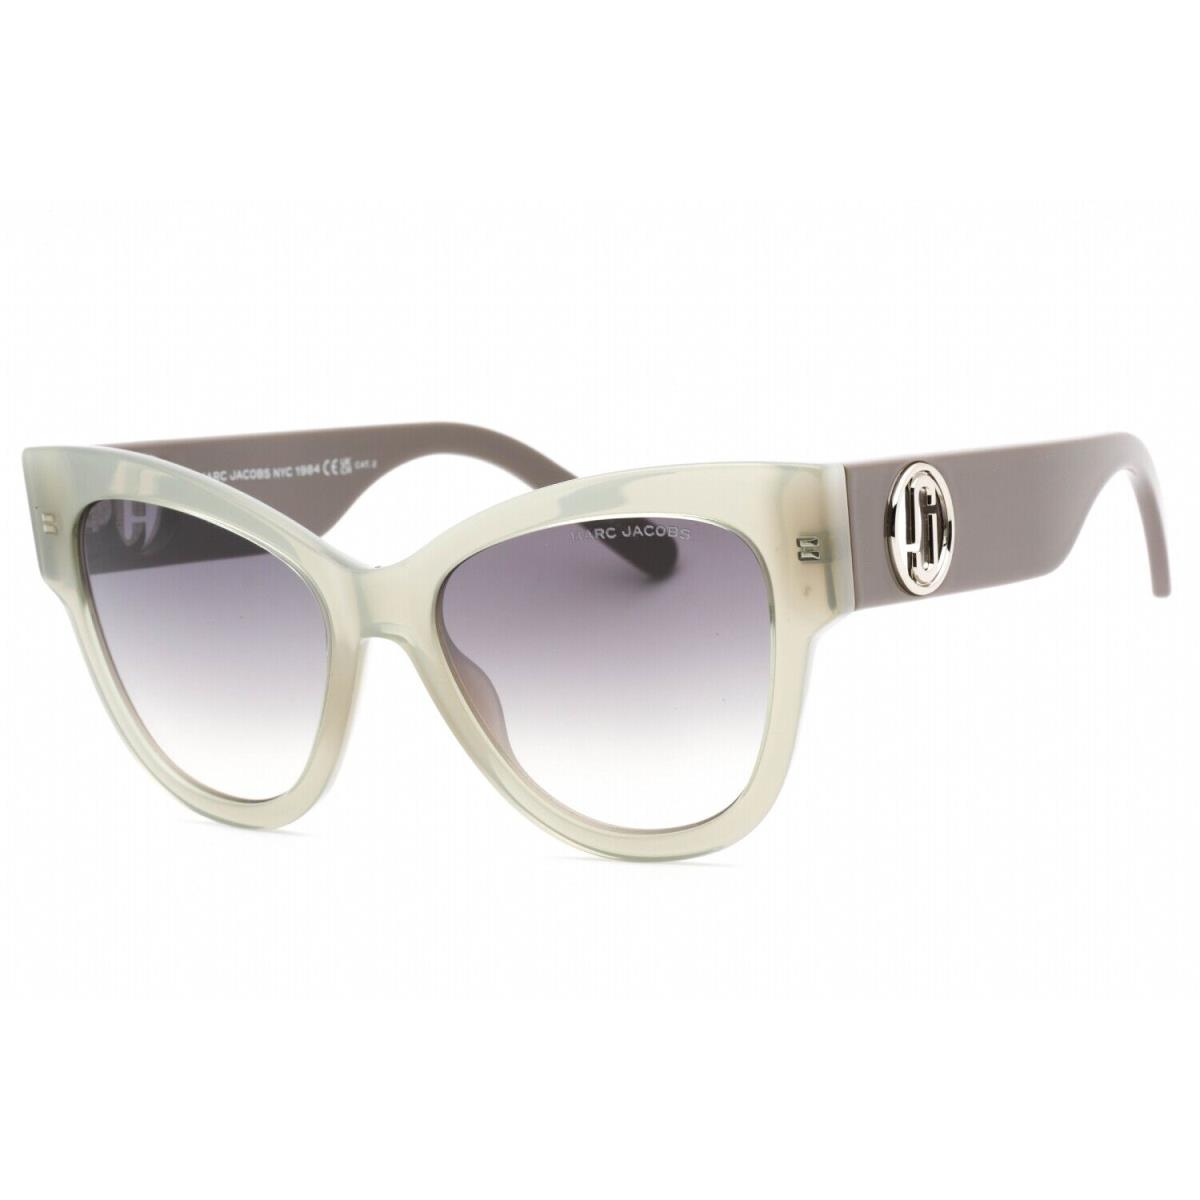 Marc Jacobs MJ697S-6CR9O-53 Sunglasses Size 53mm 145mm 18mm Sage Women